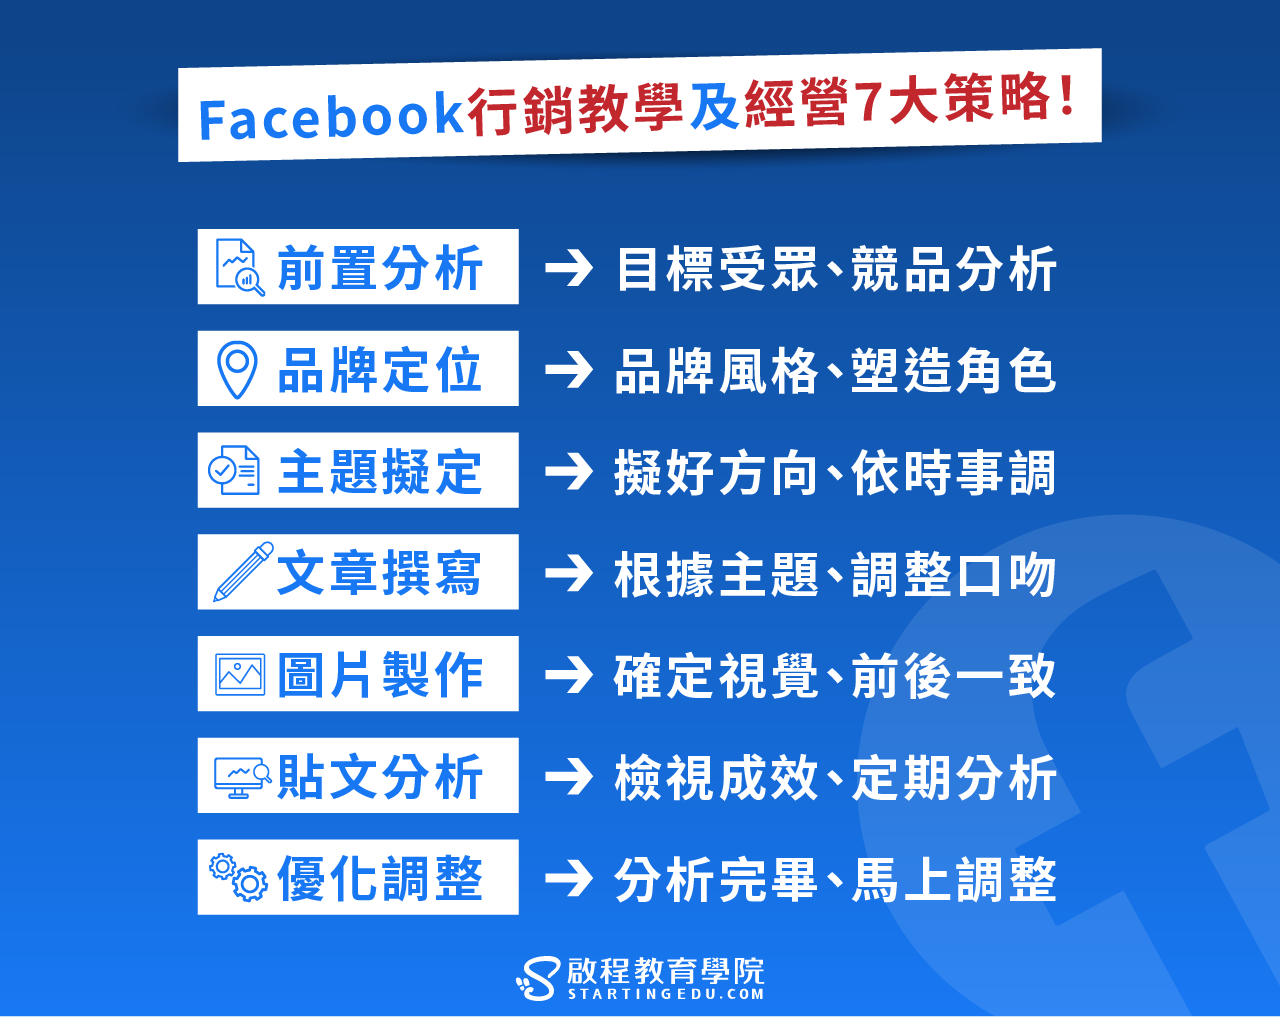 facebook-marketing fb行銷教學及經營7大策略